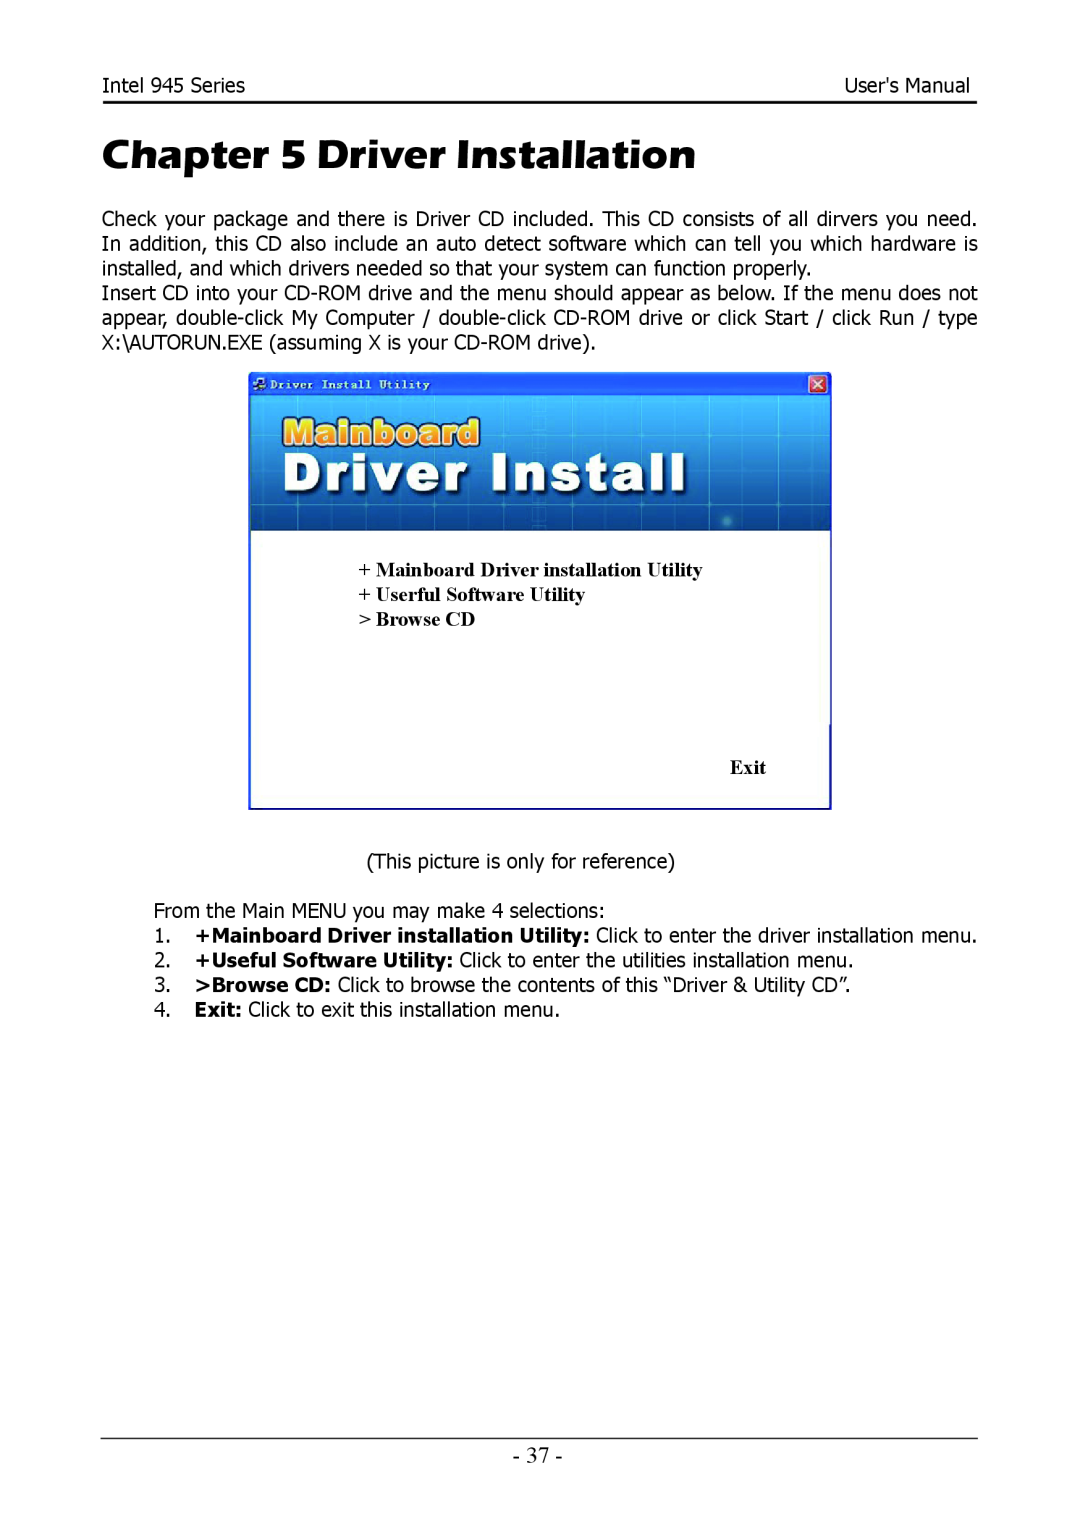 Intel 945GZT Driver Installation, + Mainboard Driver installation Utility + Userful Software Utility, Browse CD Exit 